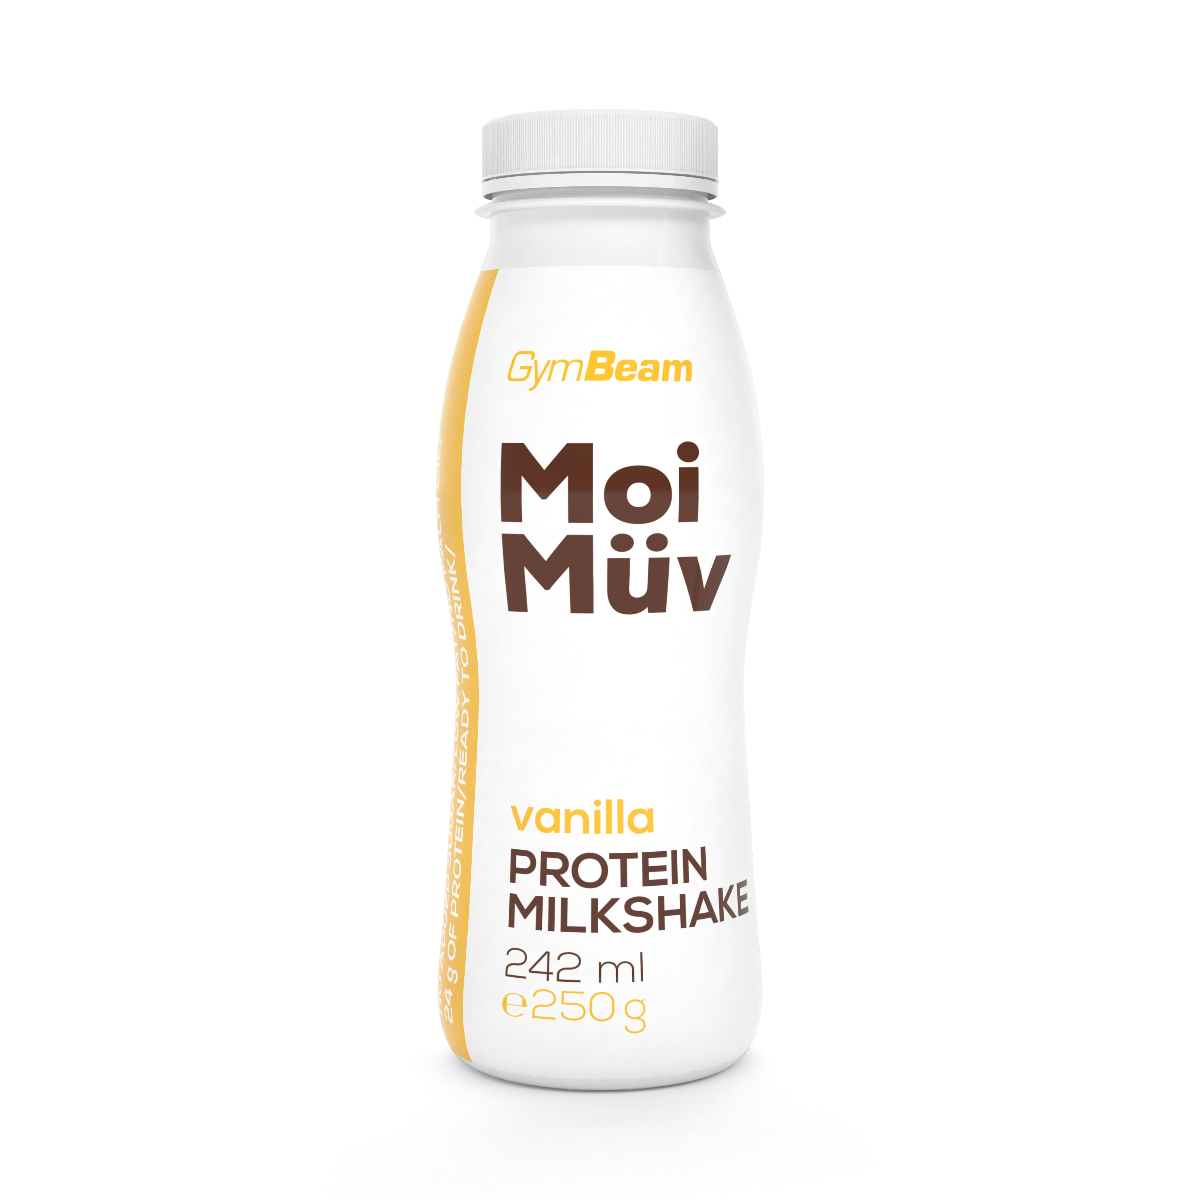 MoiMüv Protein Milkshake - GymBeam vanilka 12 x 242 ml